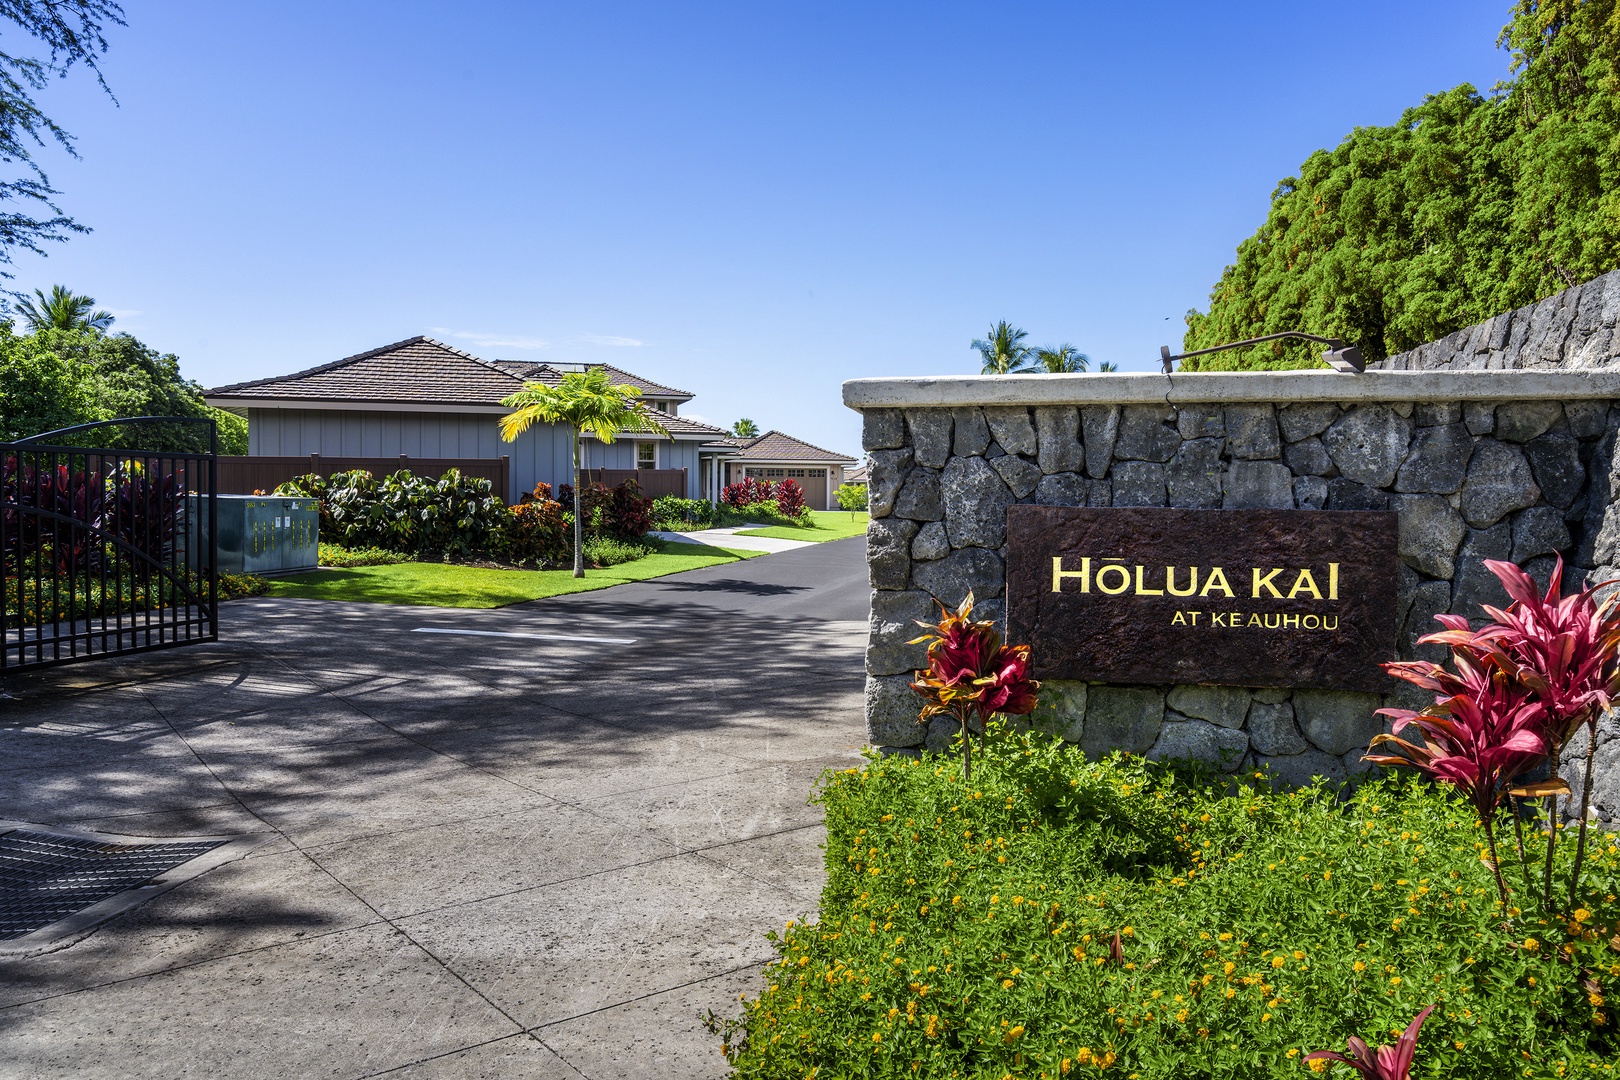 Kailua Kona Vacation Rentals, Holua Kai #27 - Holua Kai Community Gated entry